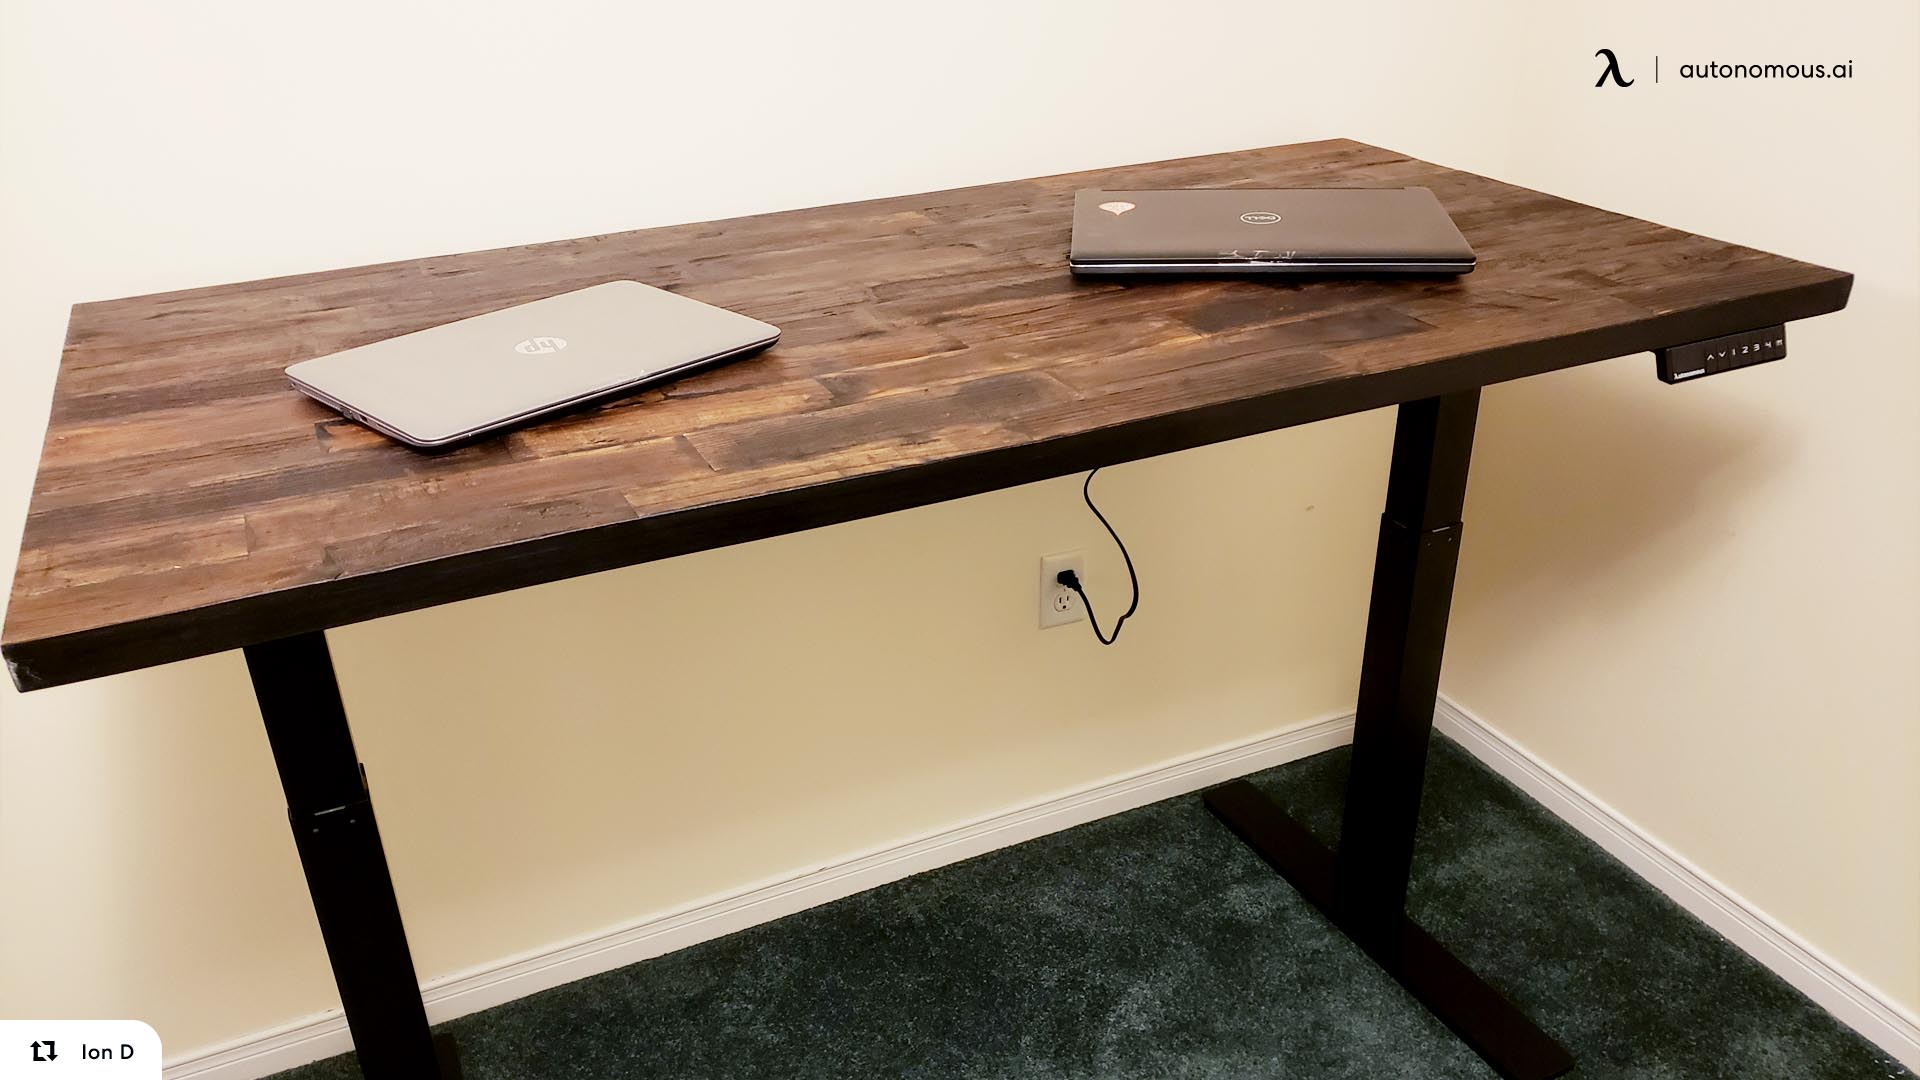 The Repurposed Desk Setup